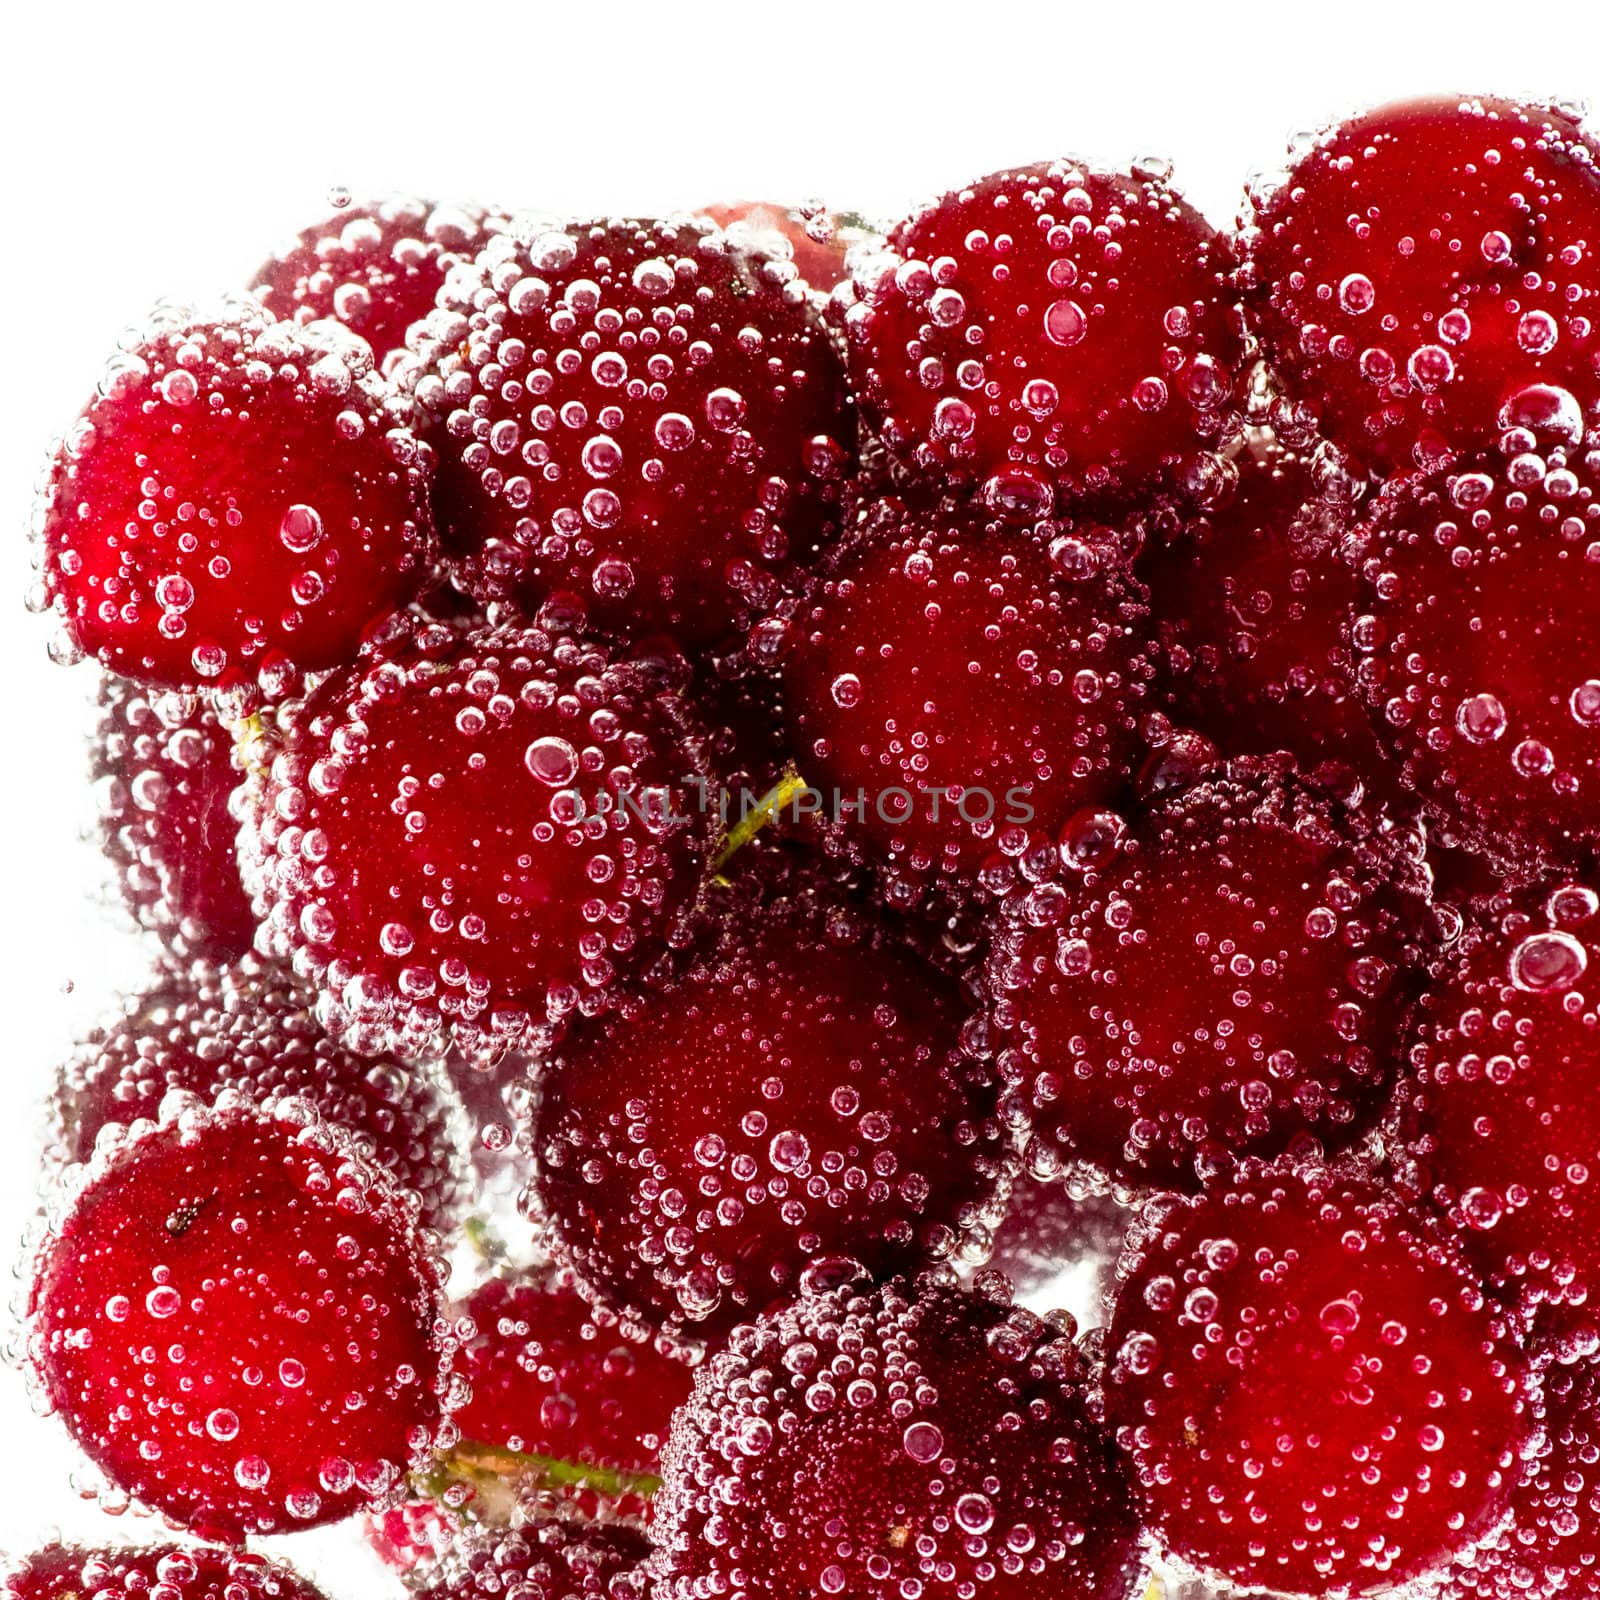 Cherries by naumoid